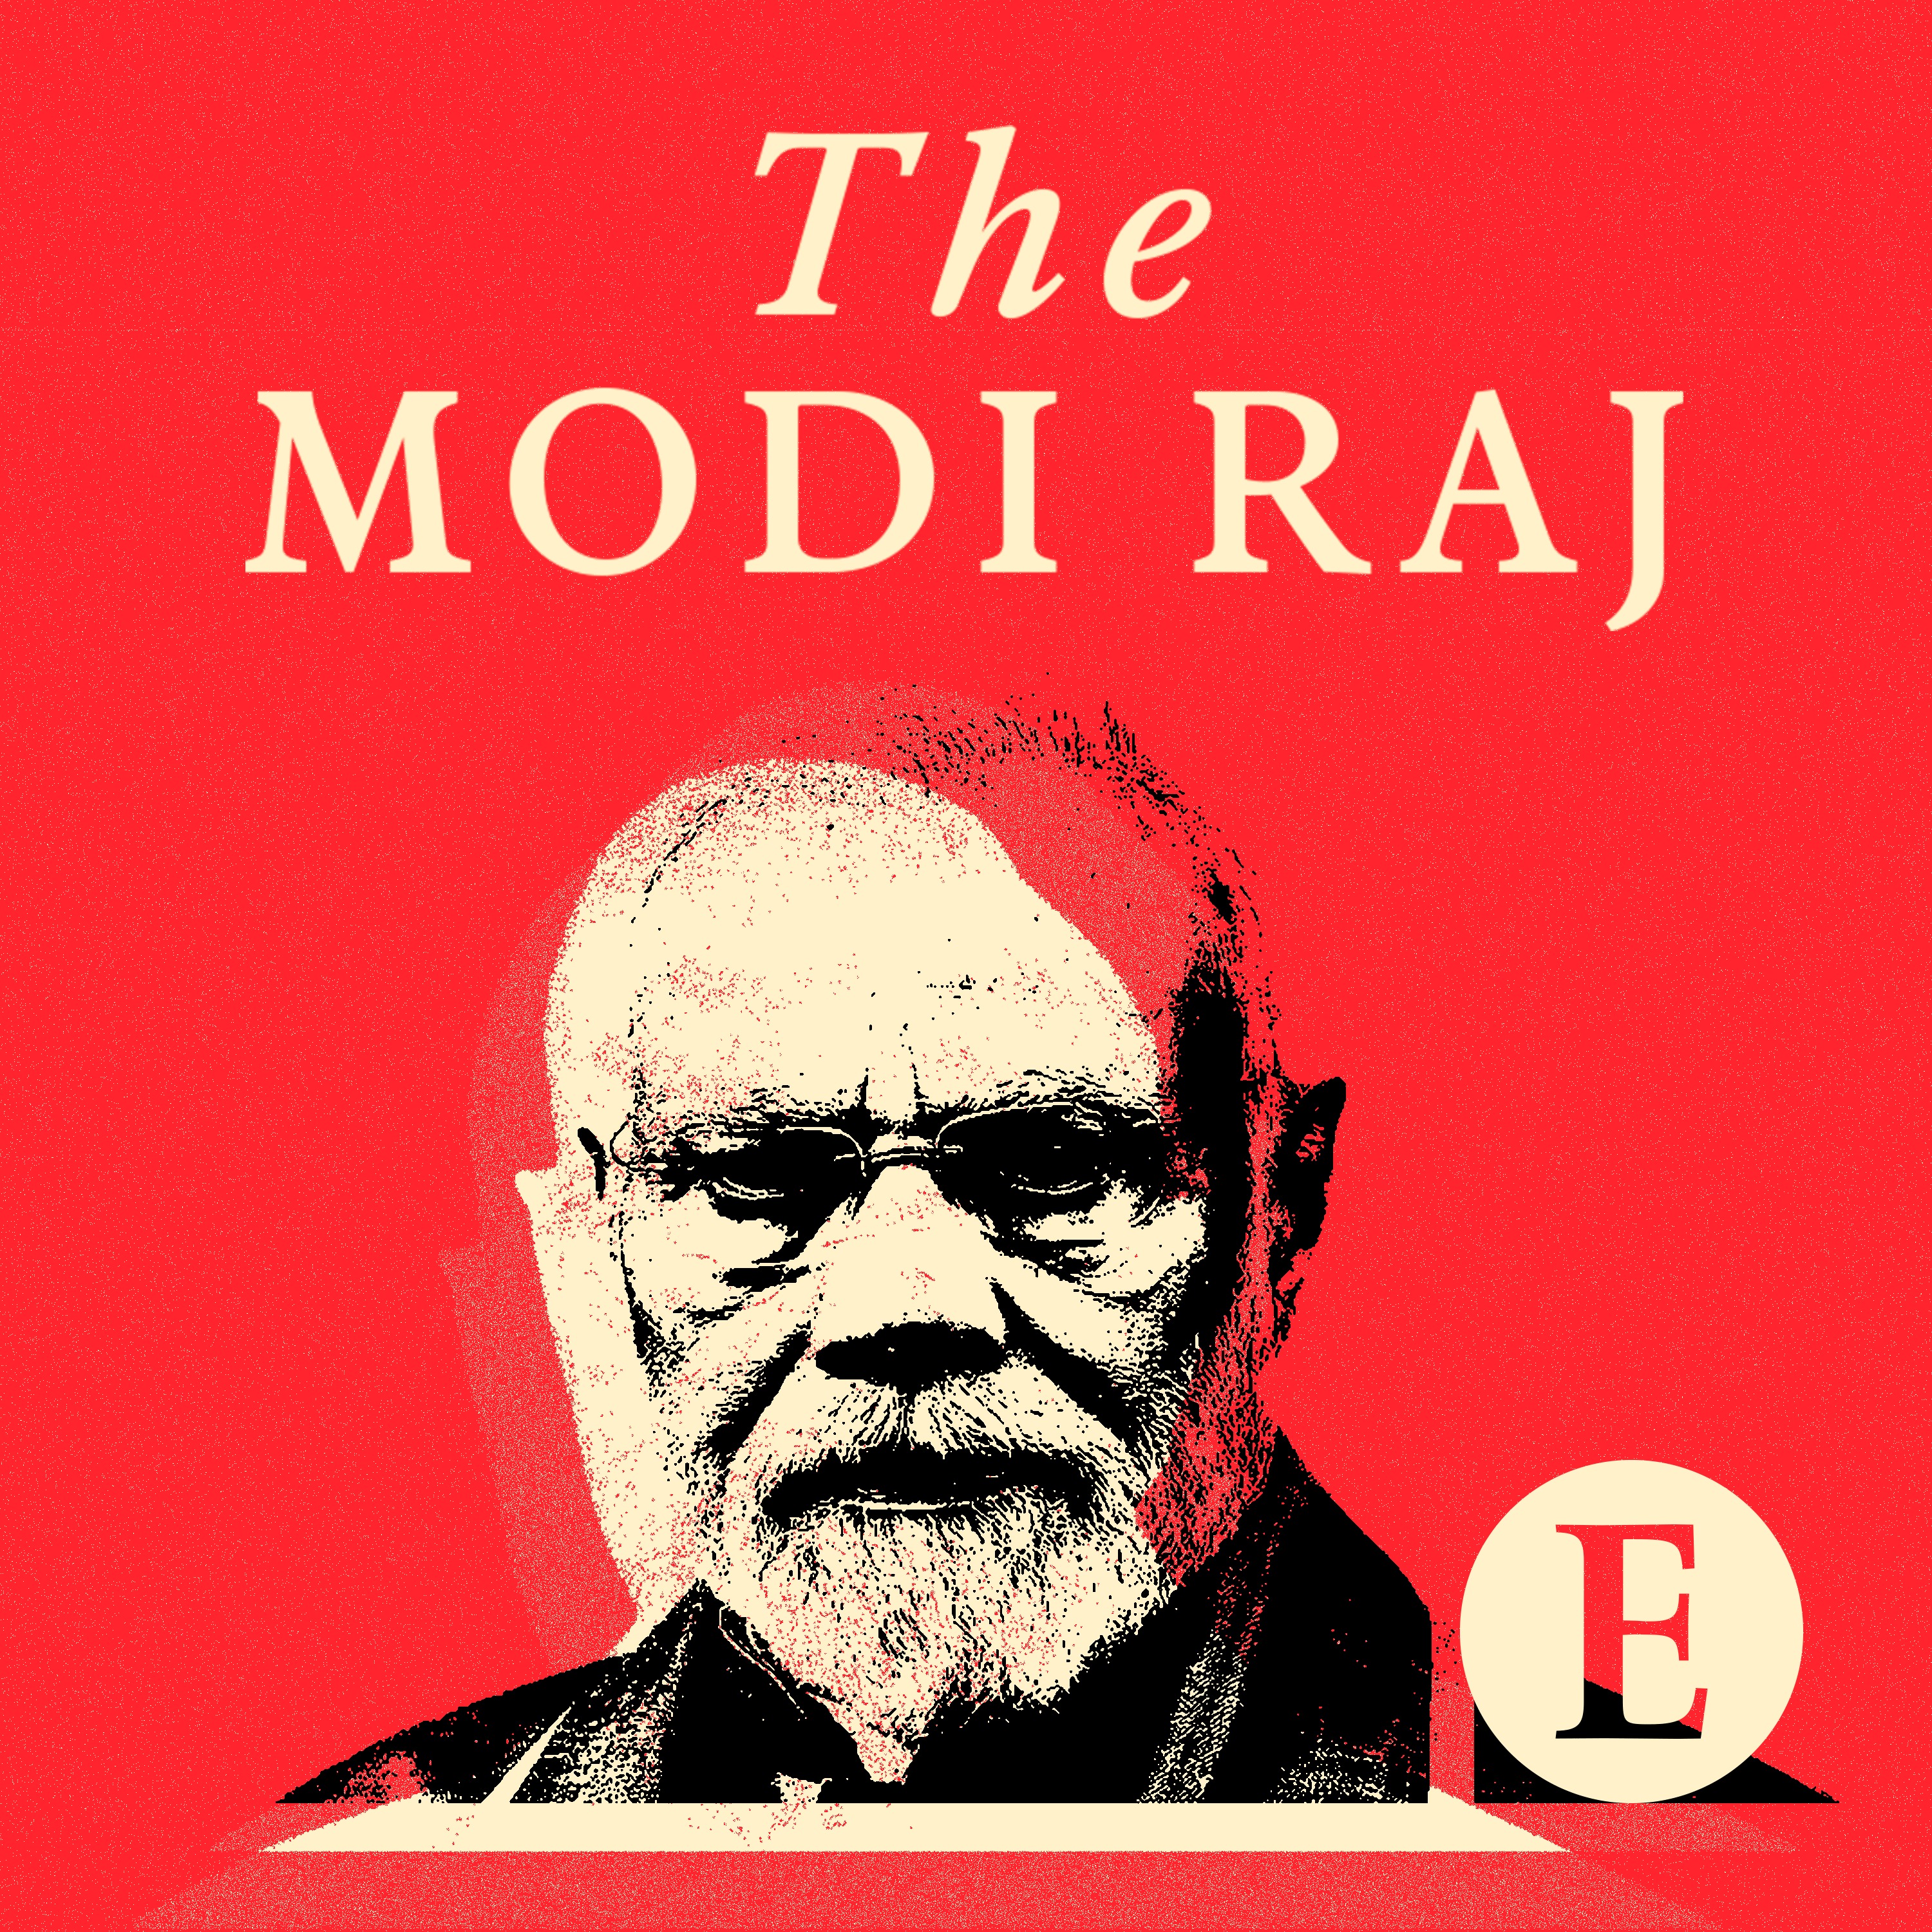 The Modi Raj from The Economist podcast show image